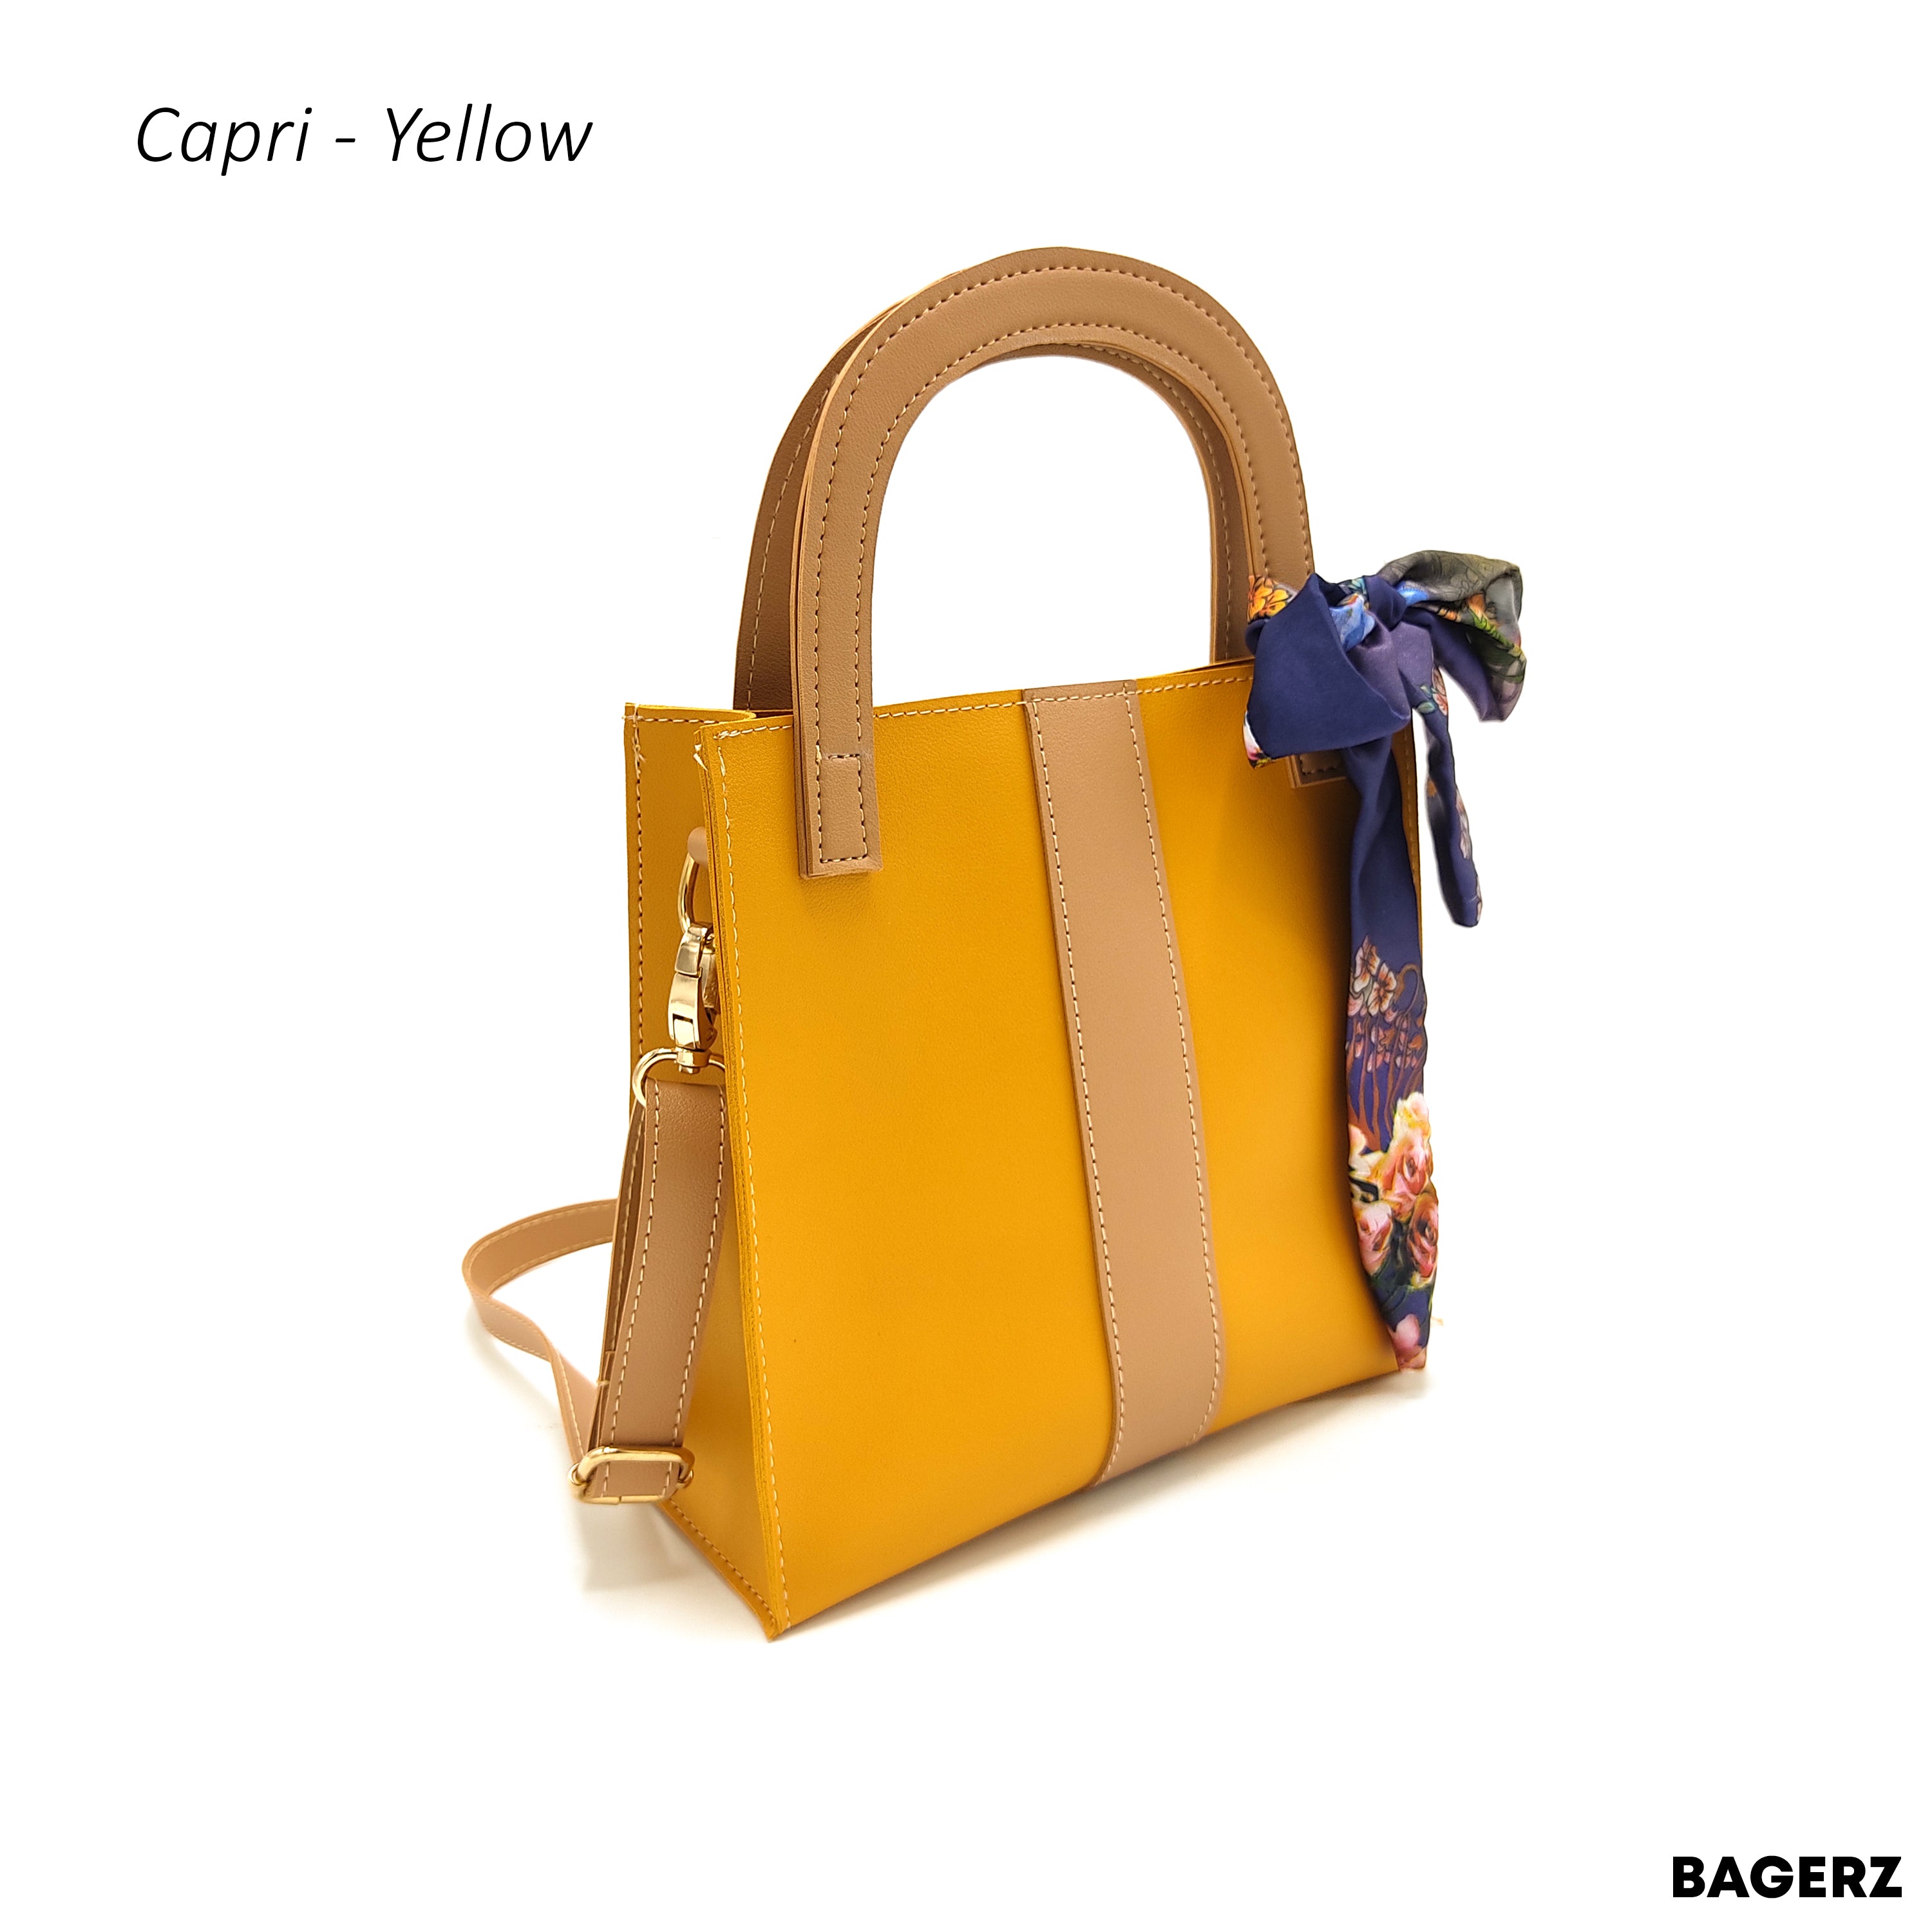 Capri - Yellow